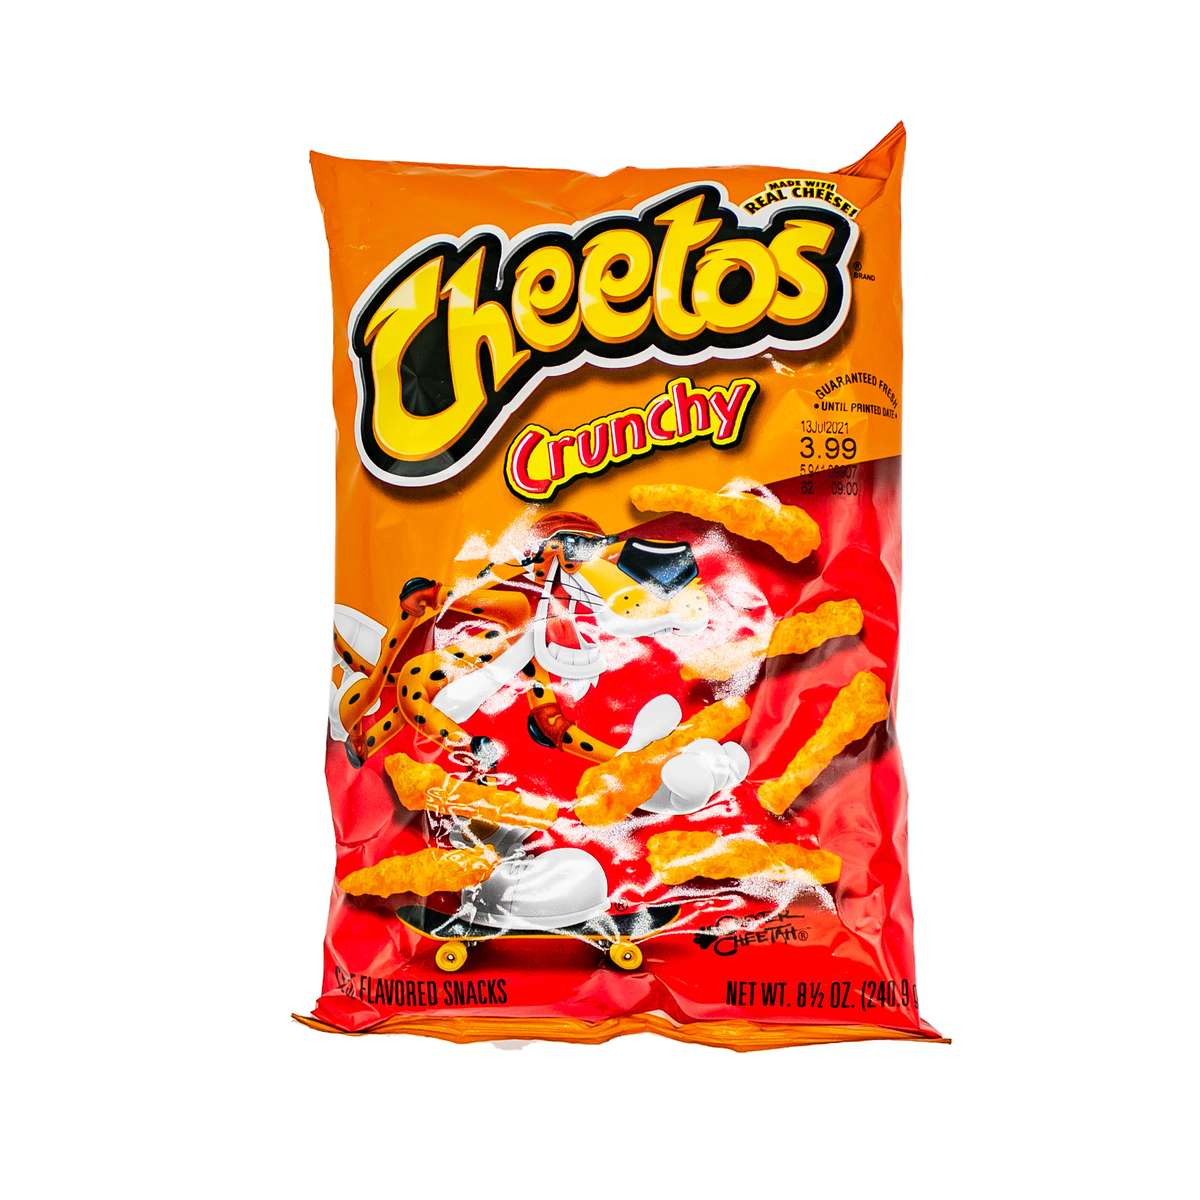 Cheetos Crunchy 8 1/2 OZ - Convenience Store - Rafman's Kitchen & Snax